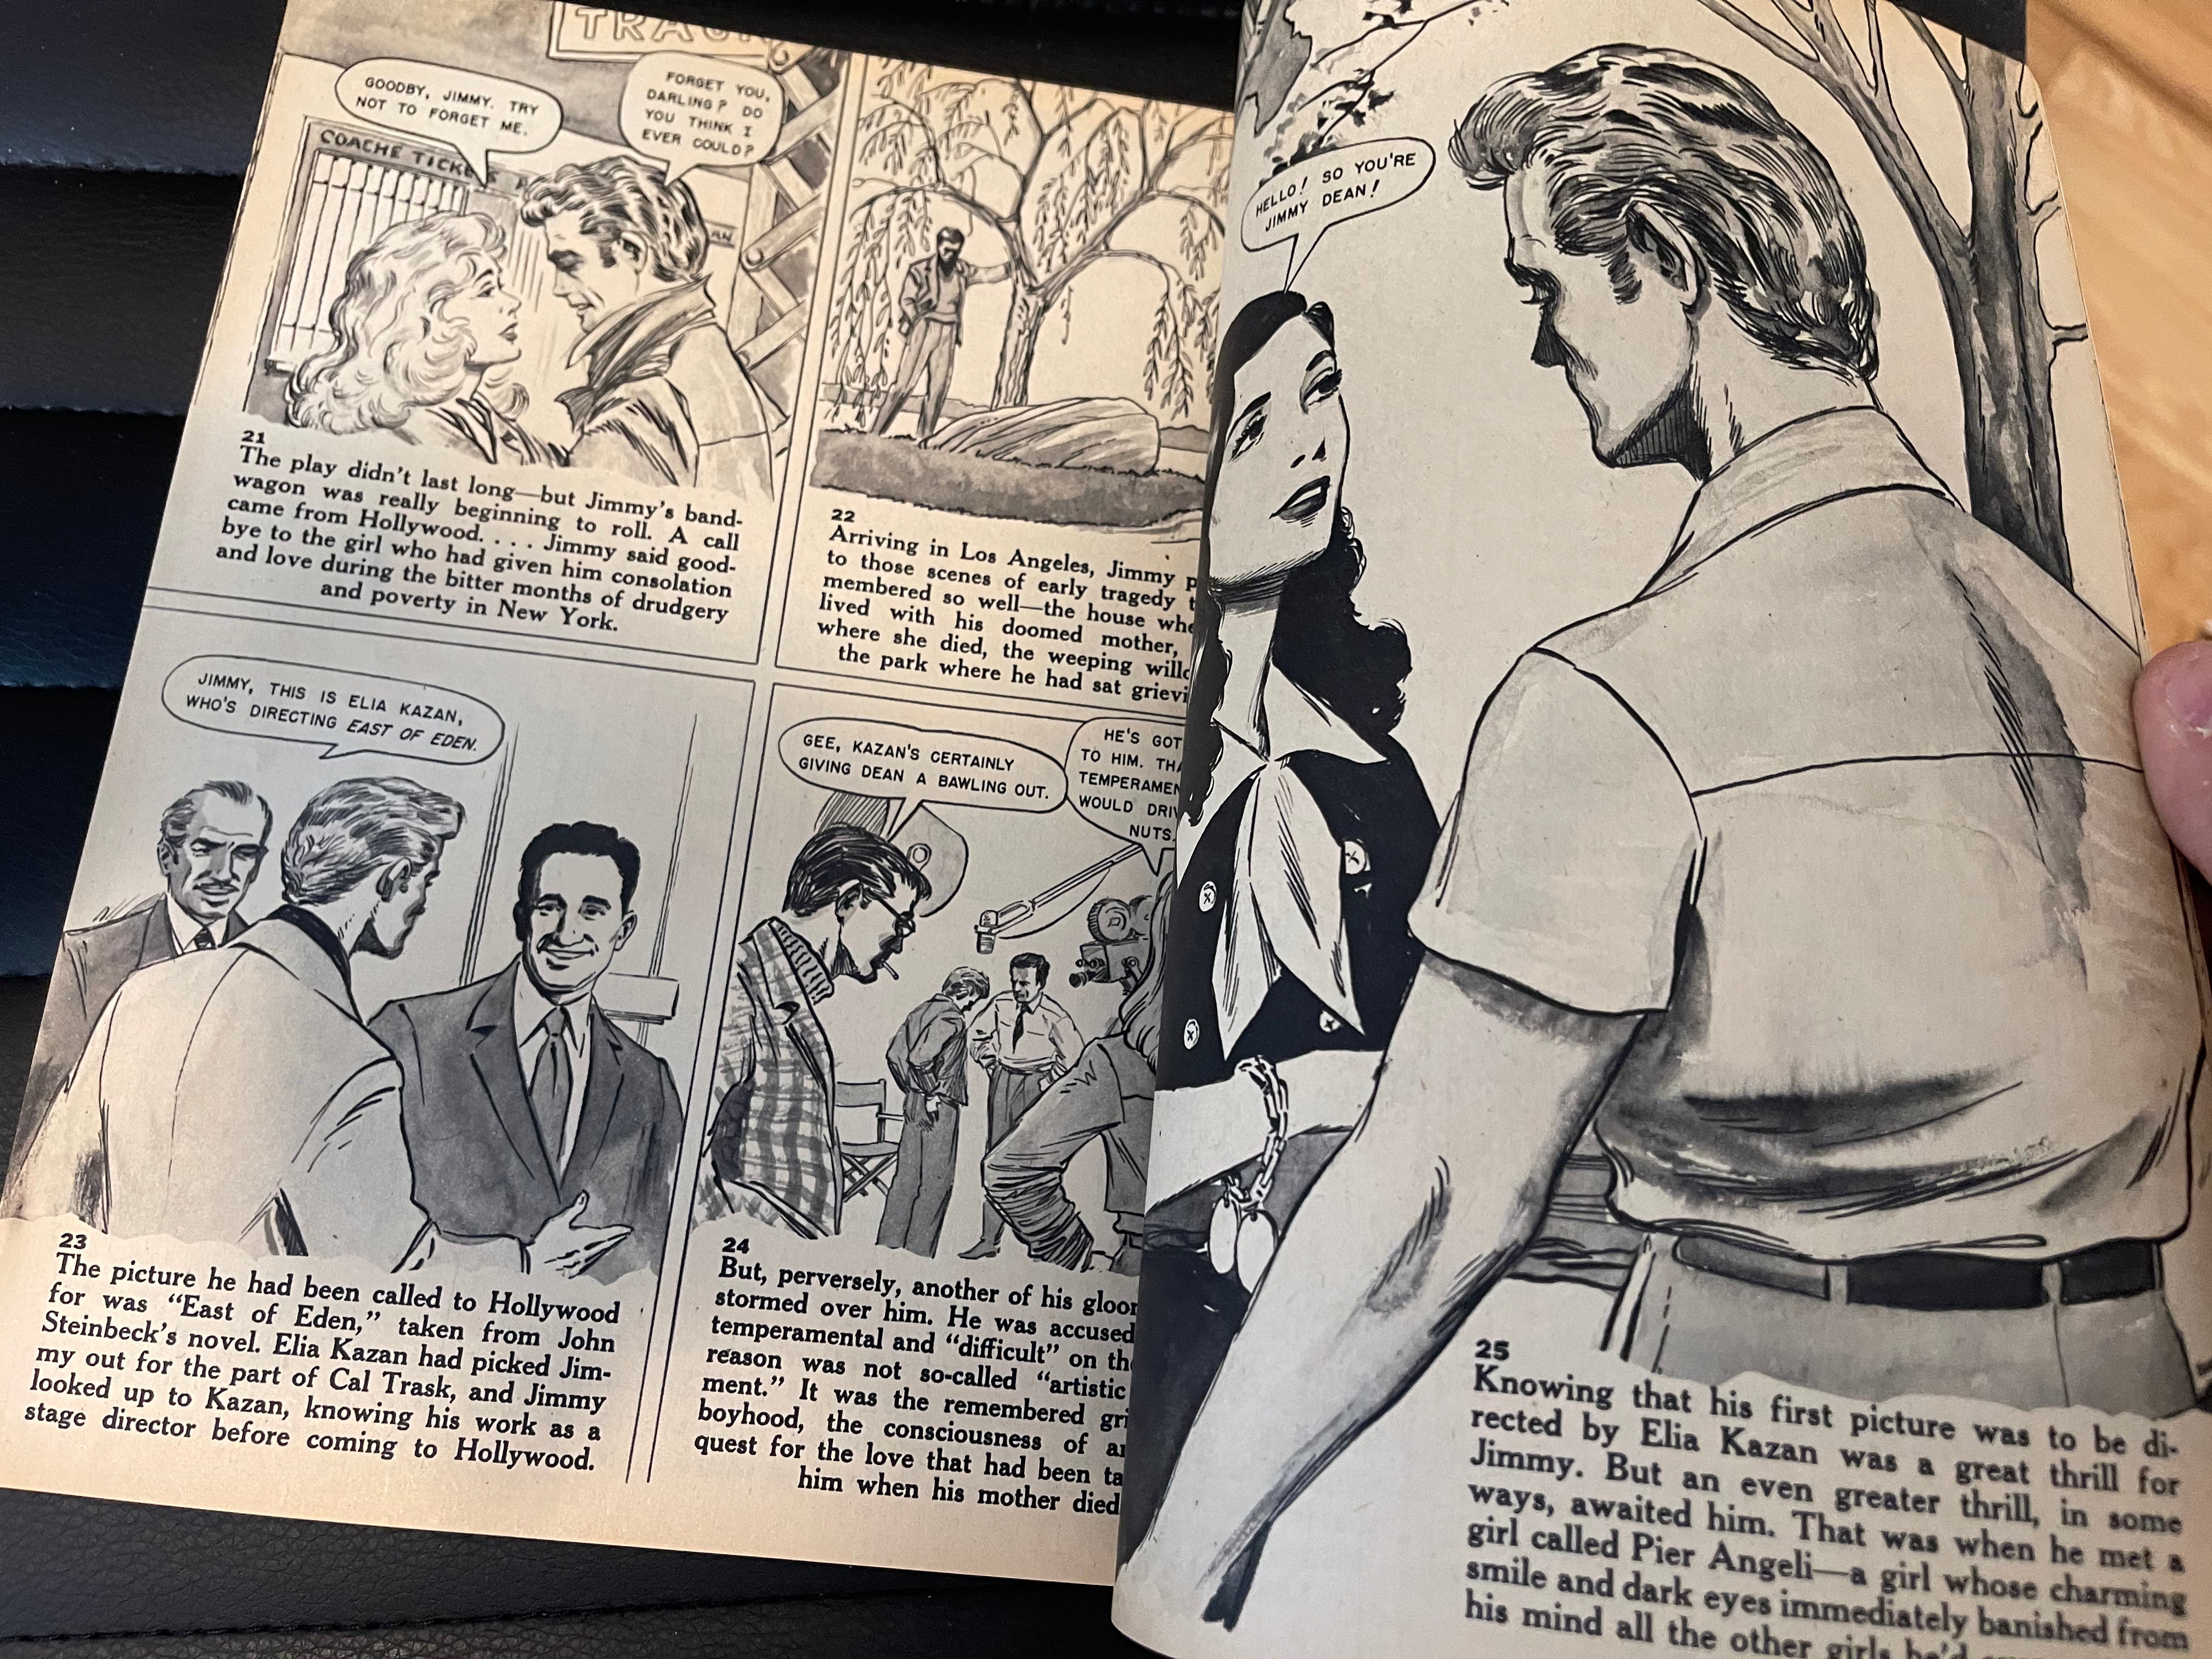 1956 Elvis / James Dean rare movie magazine